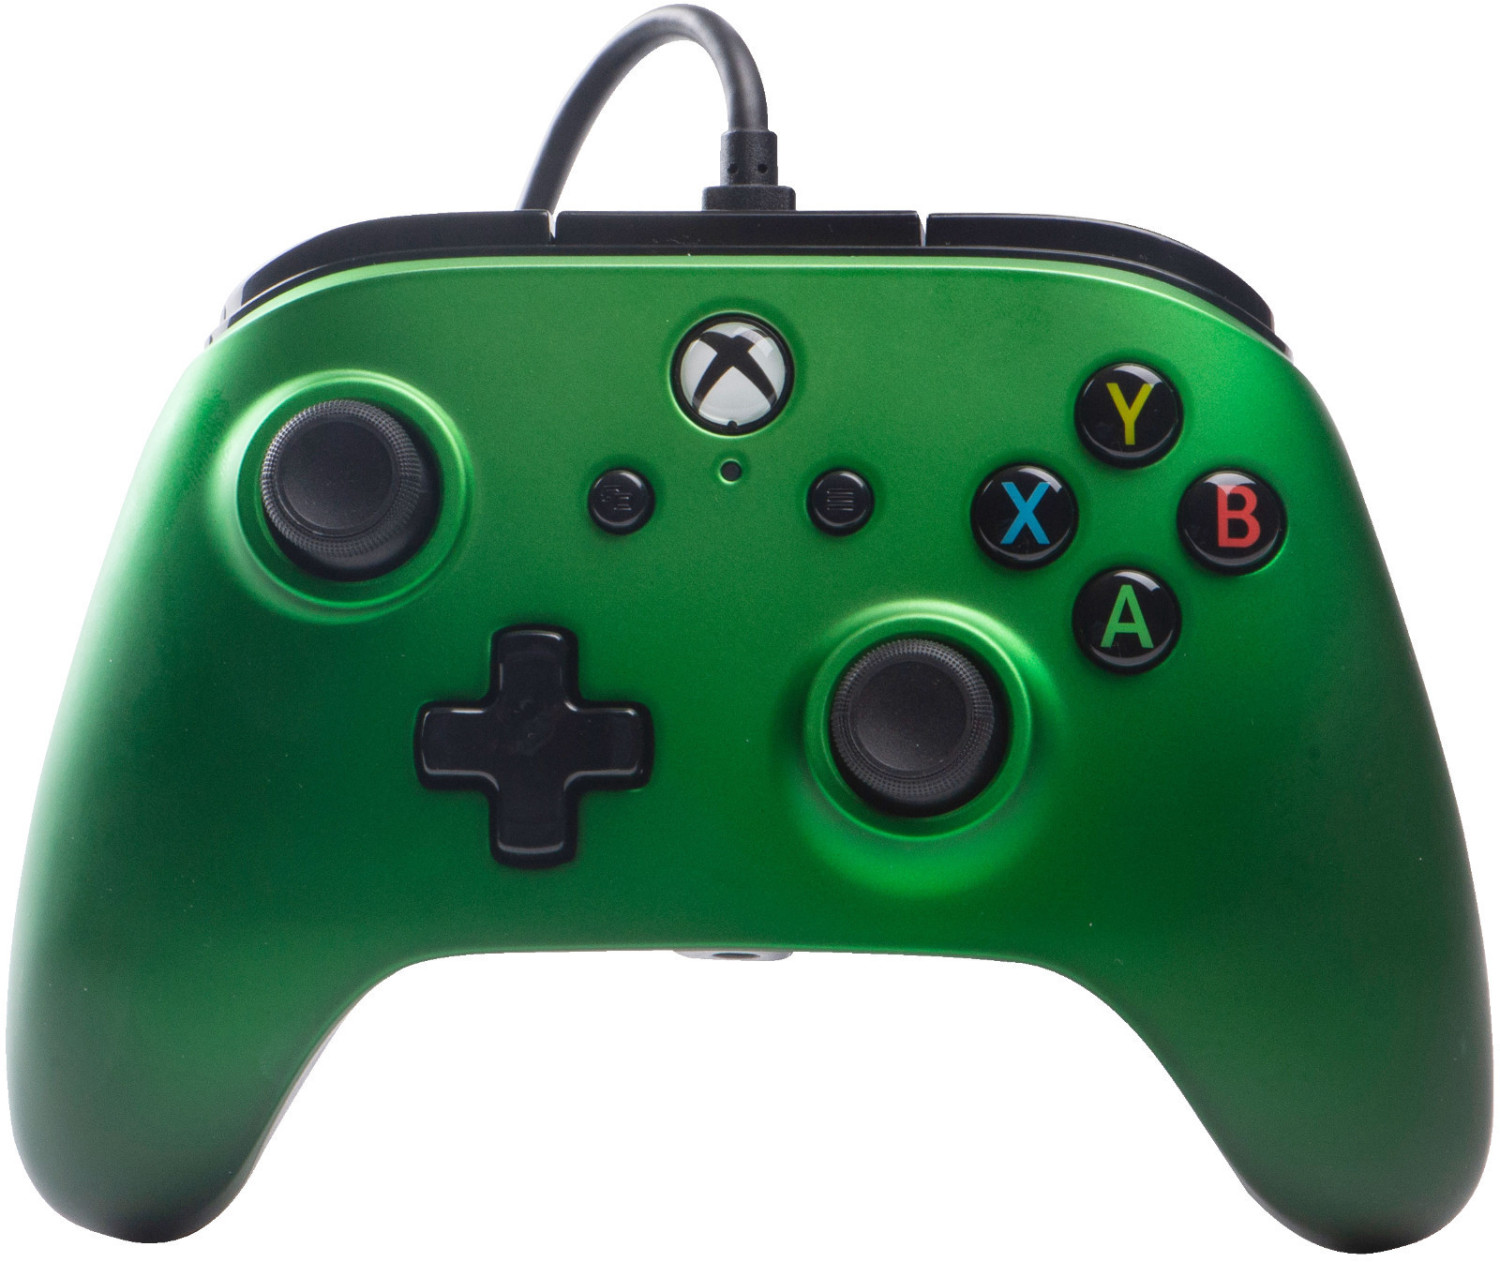 Зеленый джойстик. Xbox one Controller wired. Геймпад от Xbox Series x зеленого цвета. Приложение такое где зеленый джойстик.